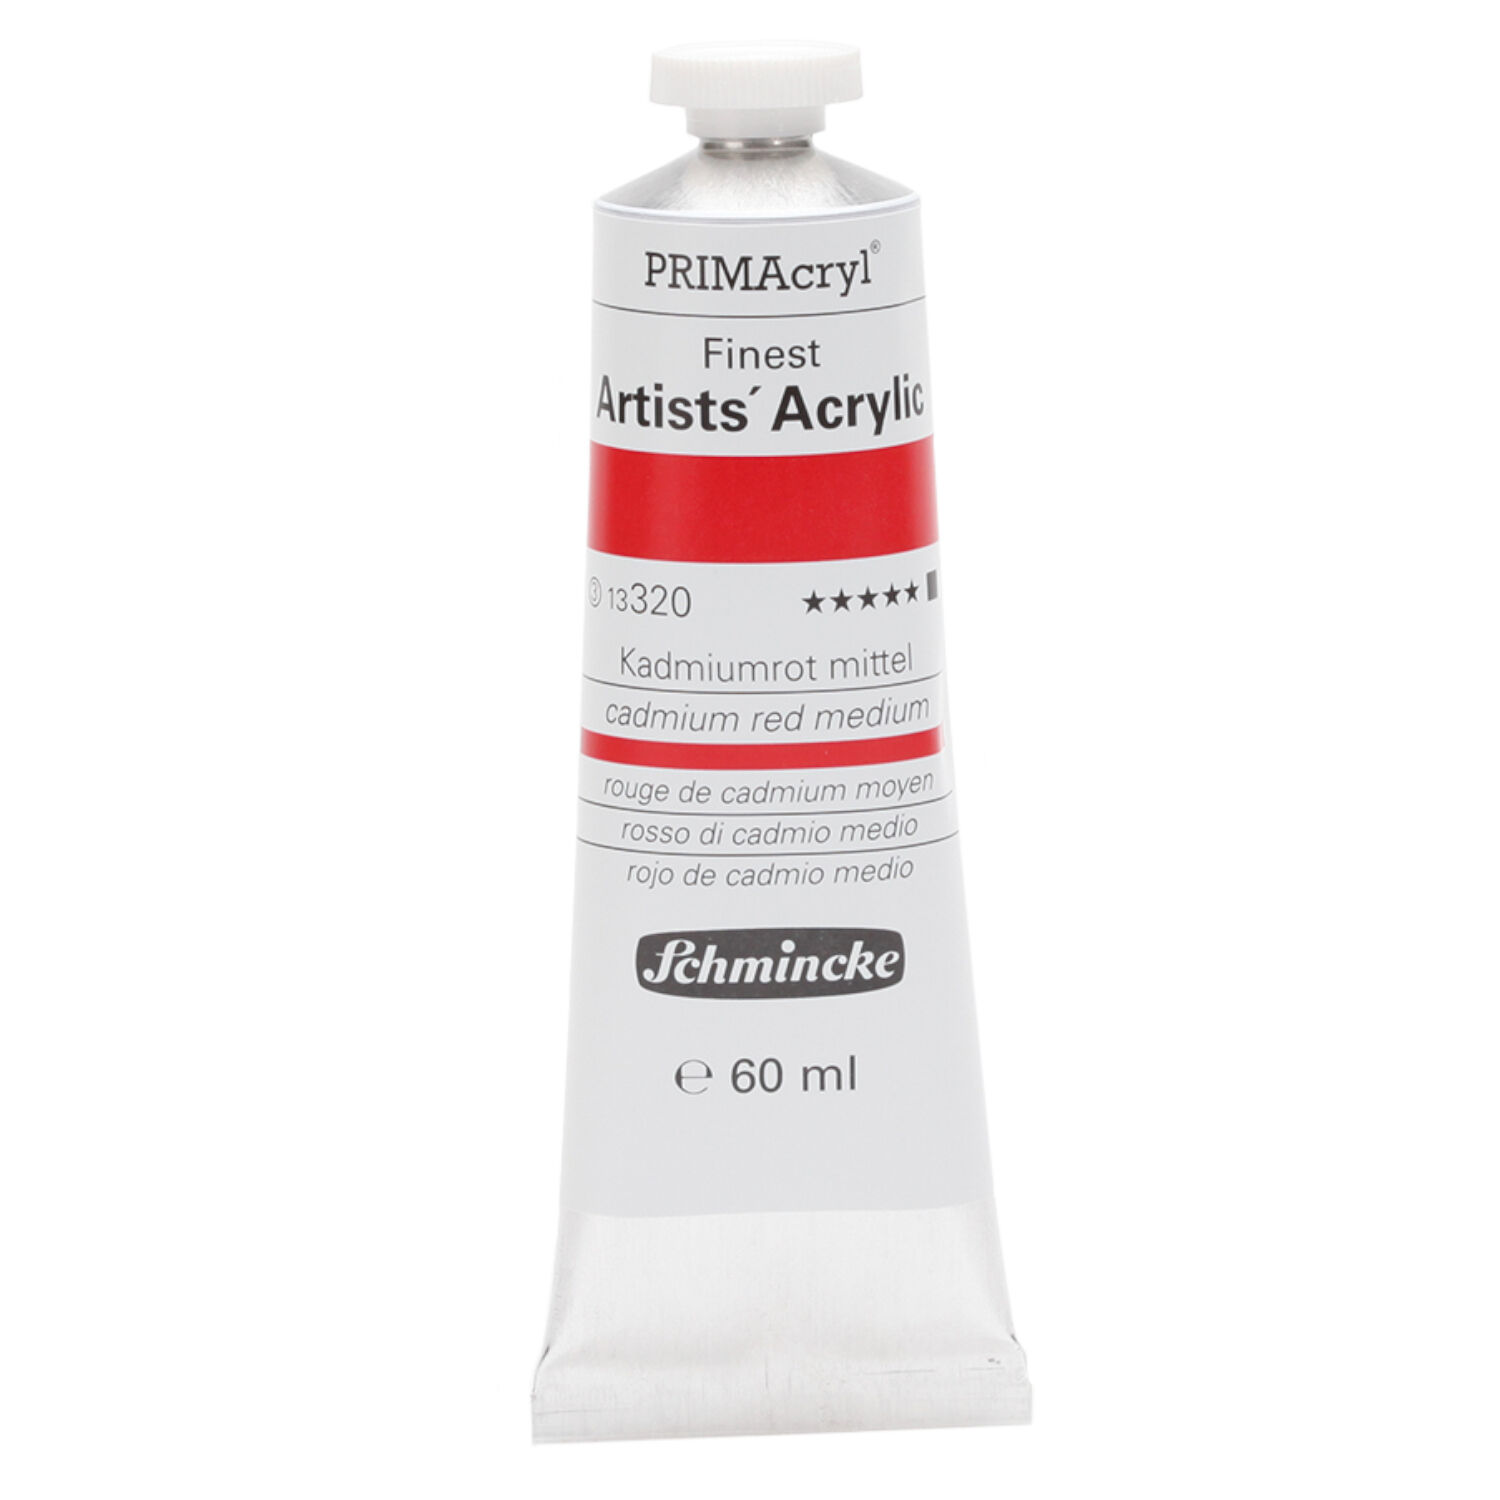 PRIMAcryl 60ml, Kadmiumrot mittel